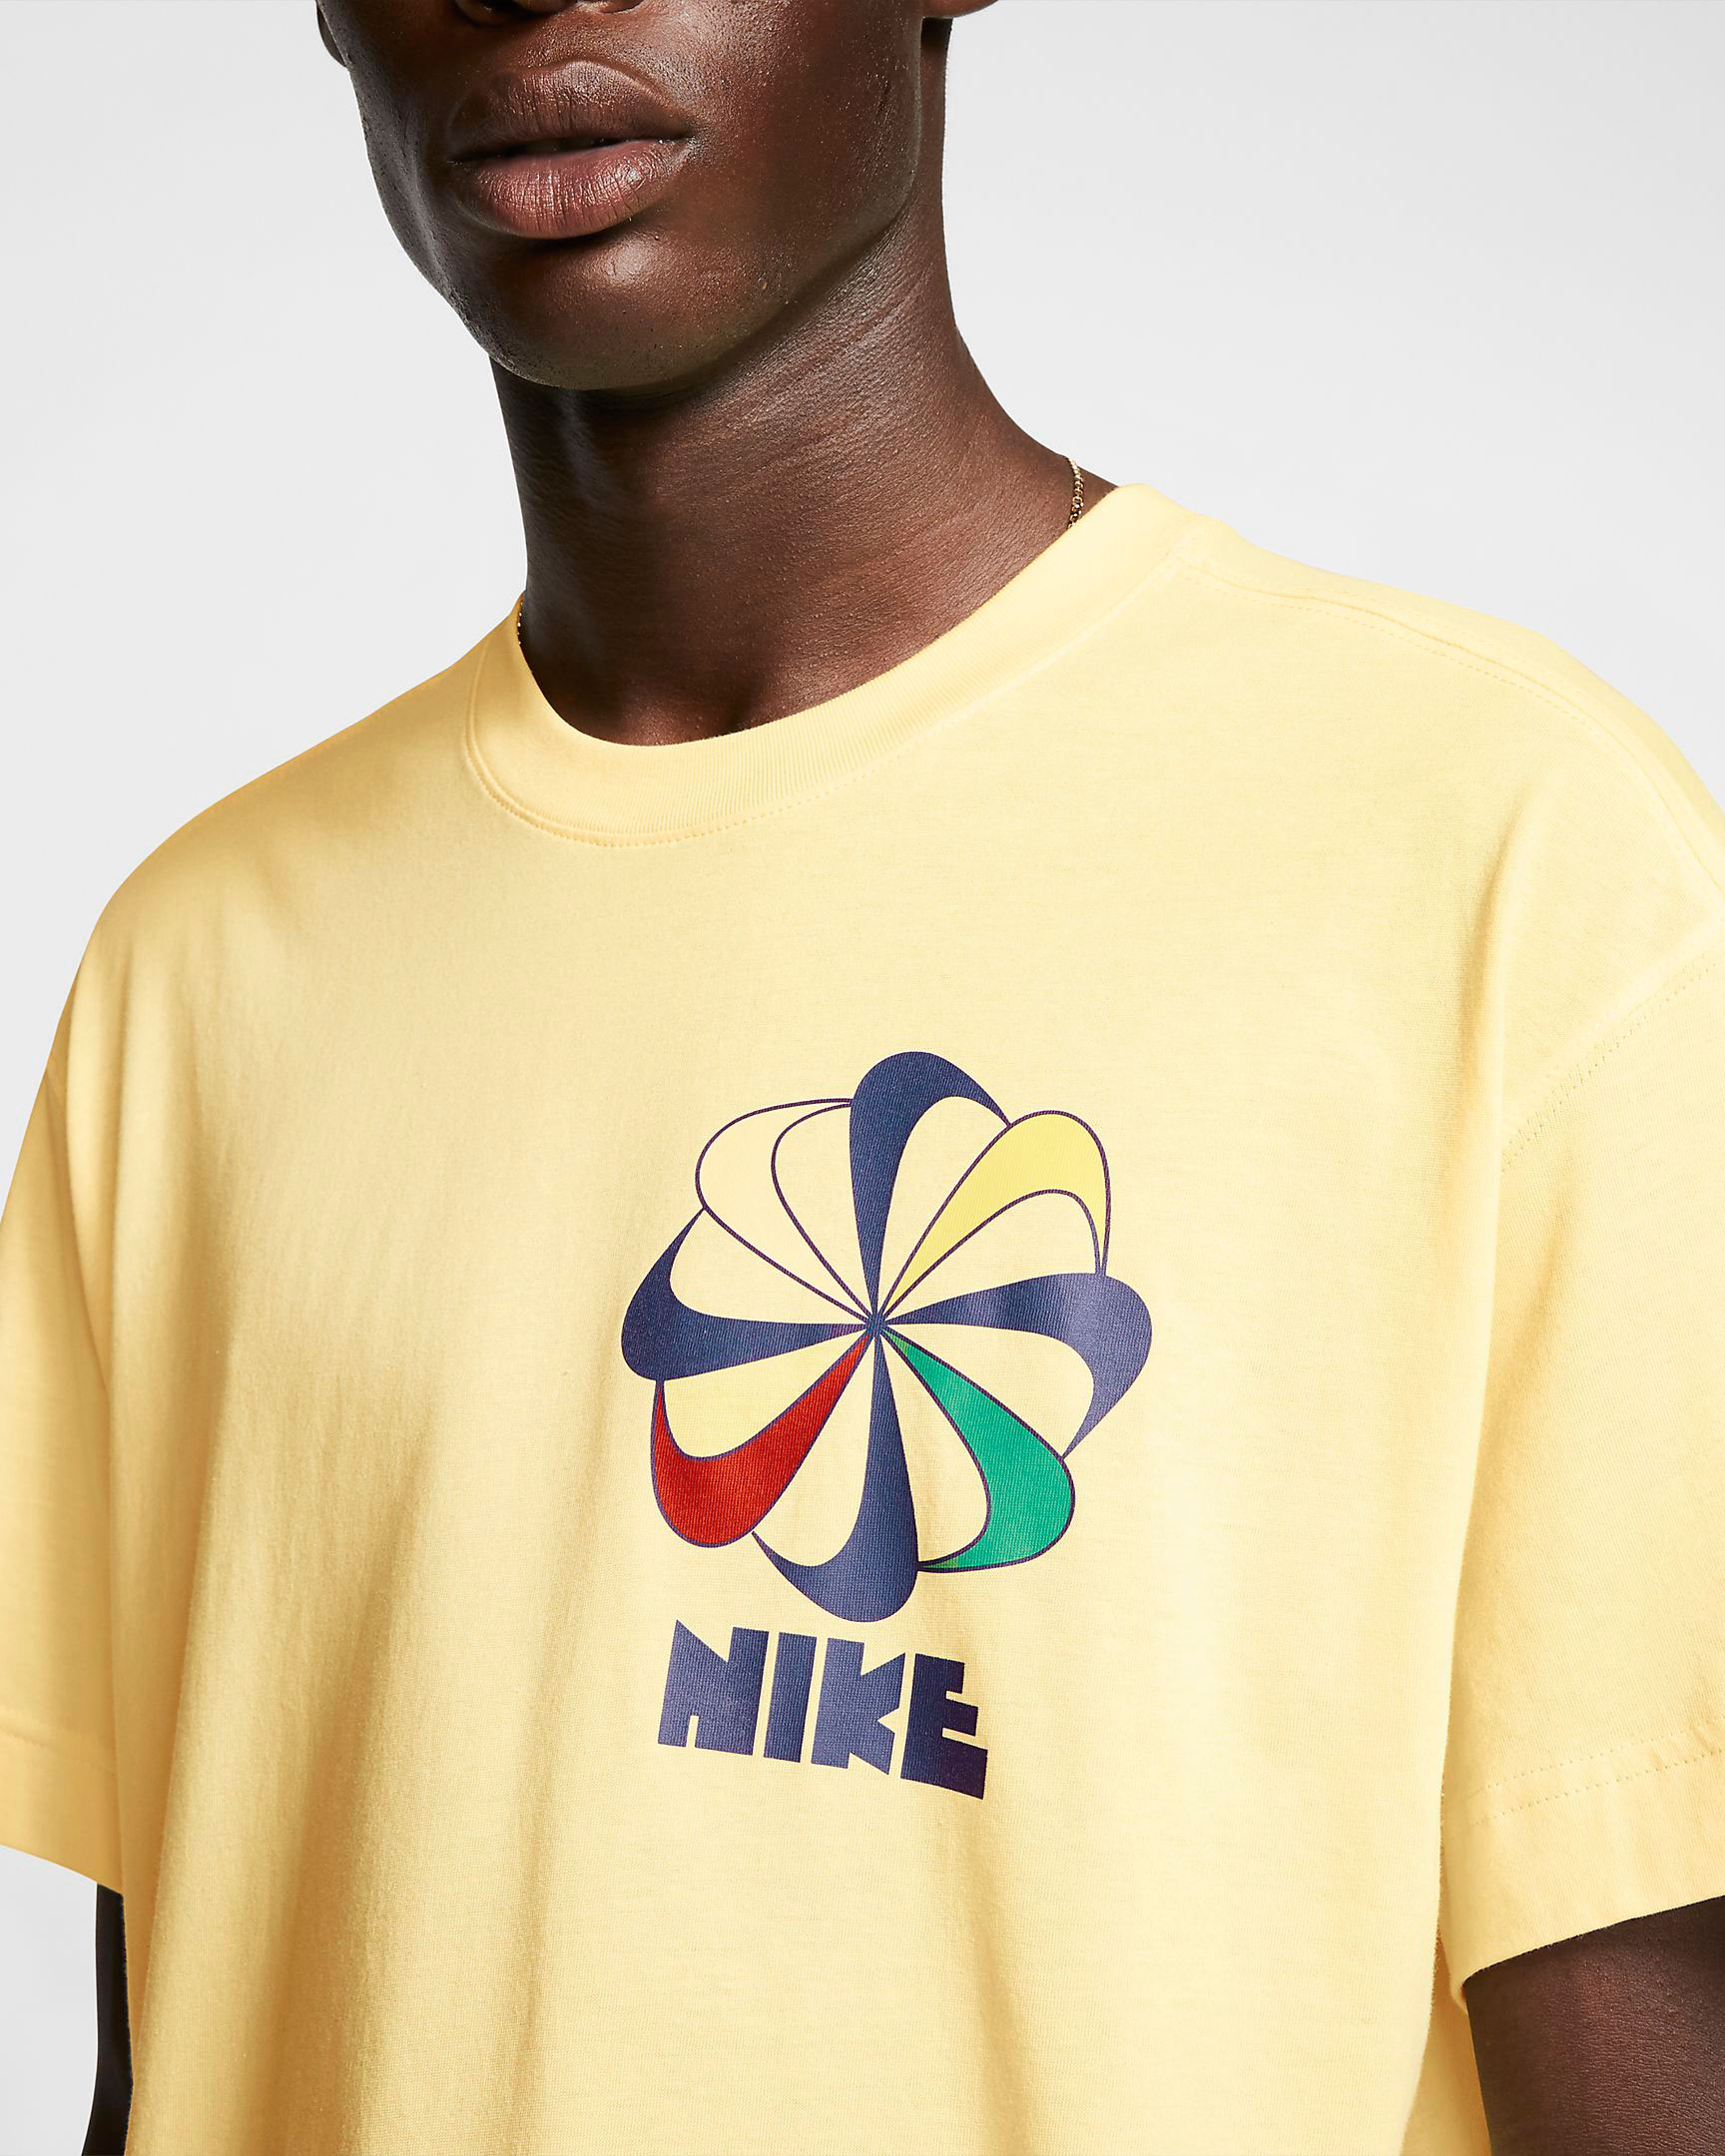 nike-sunburst-pinwheel-shirt-yellow-3